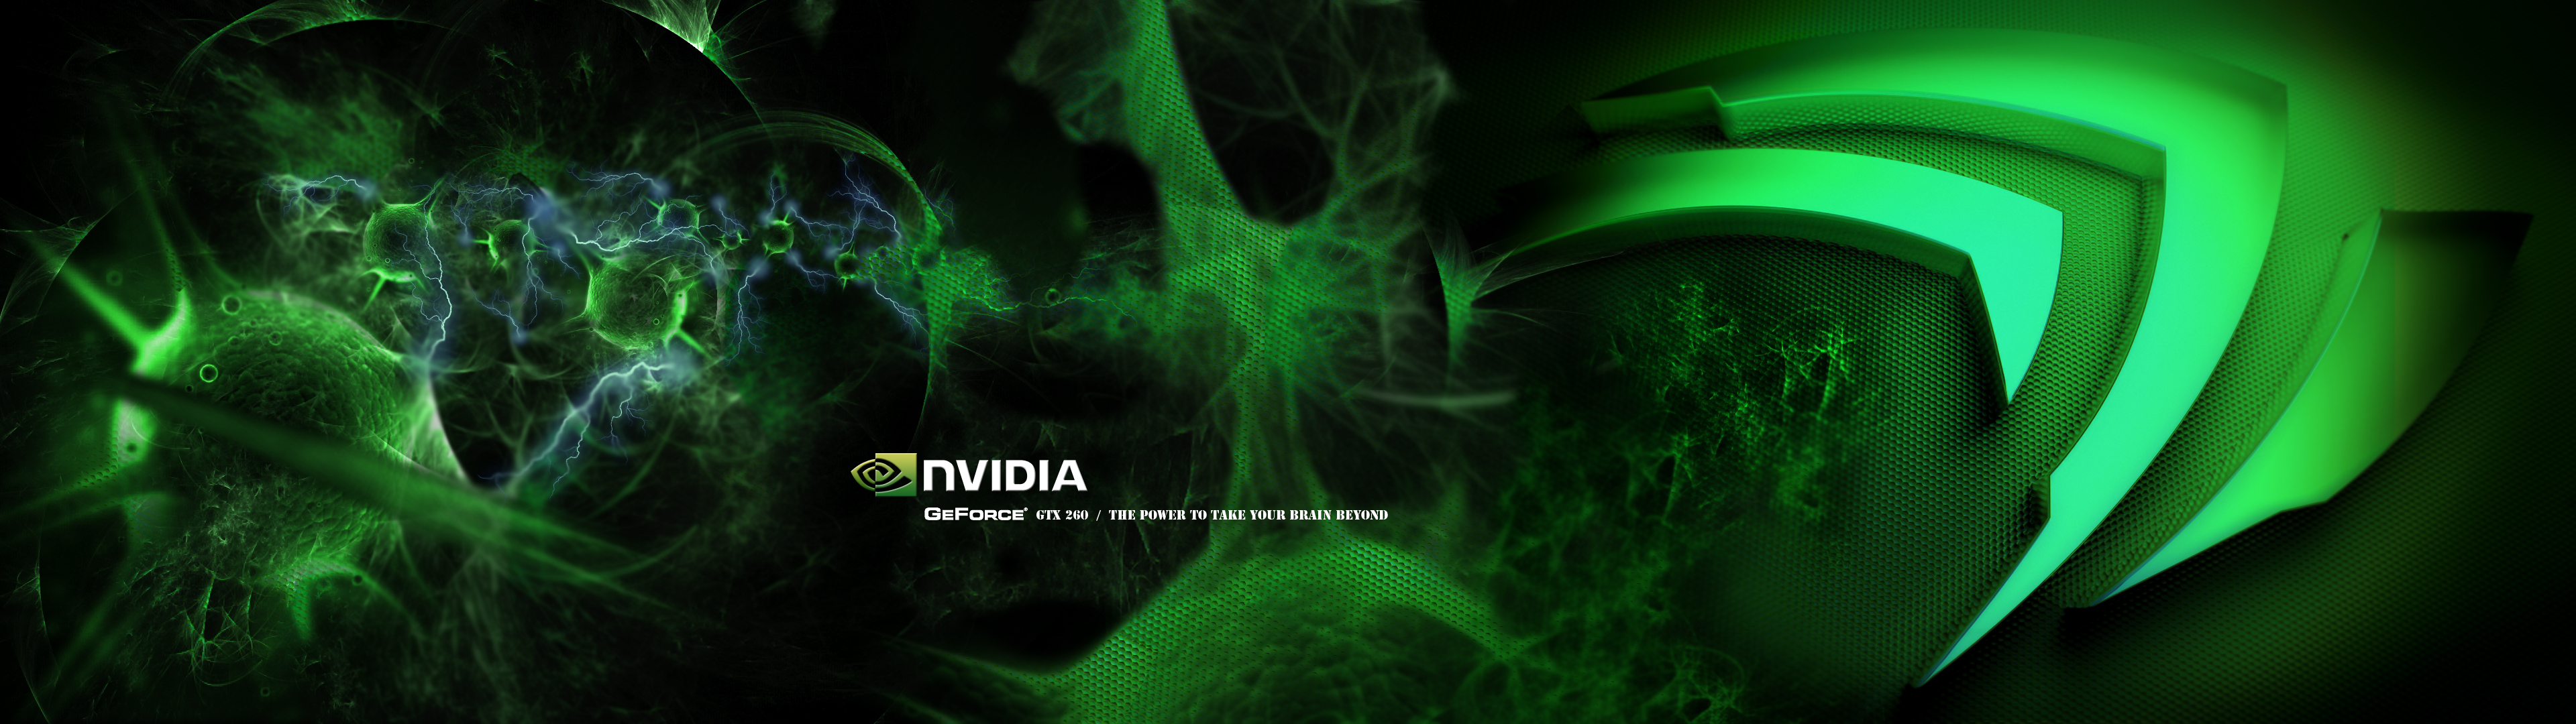 Nvidia Dual Monitor Wallpaper By Verdessoto